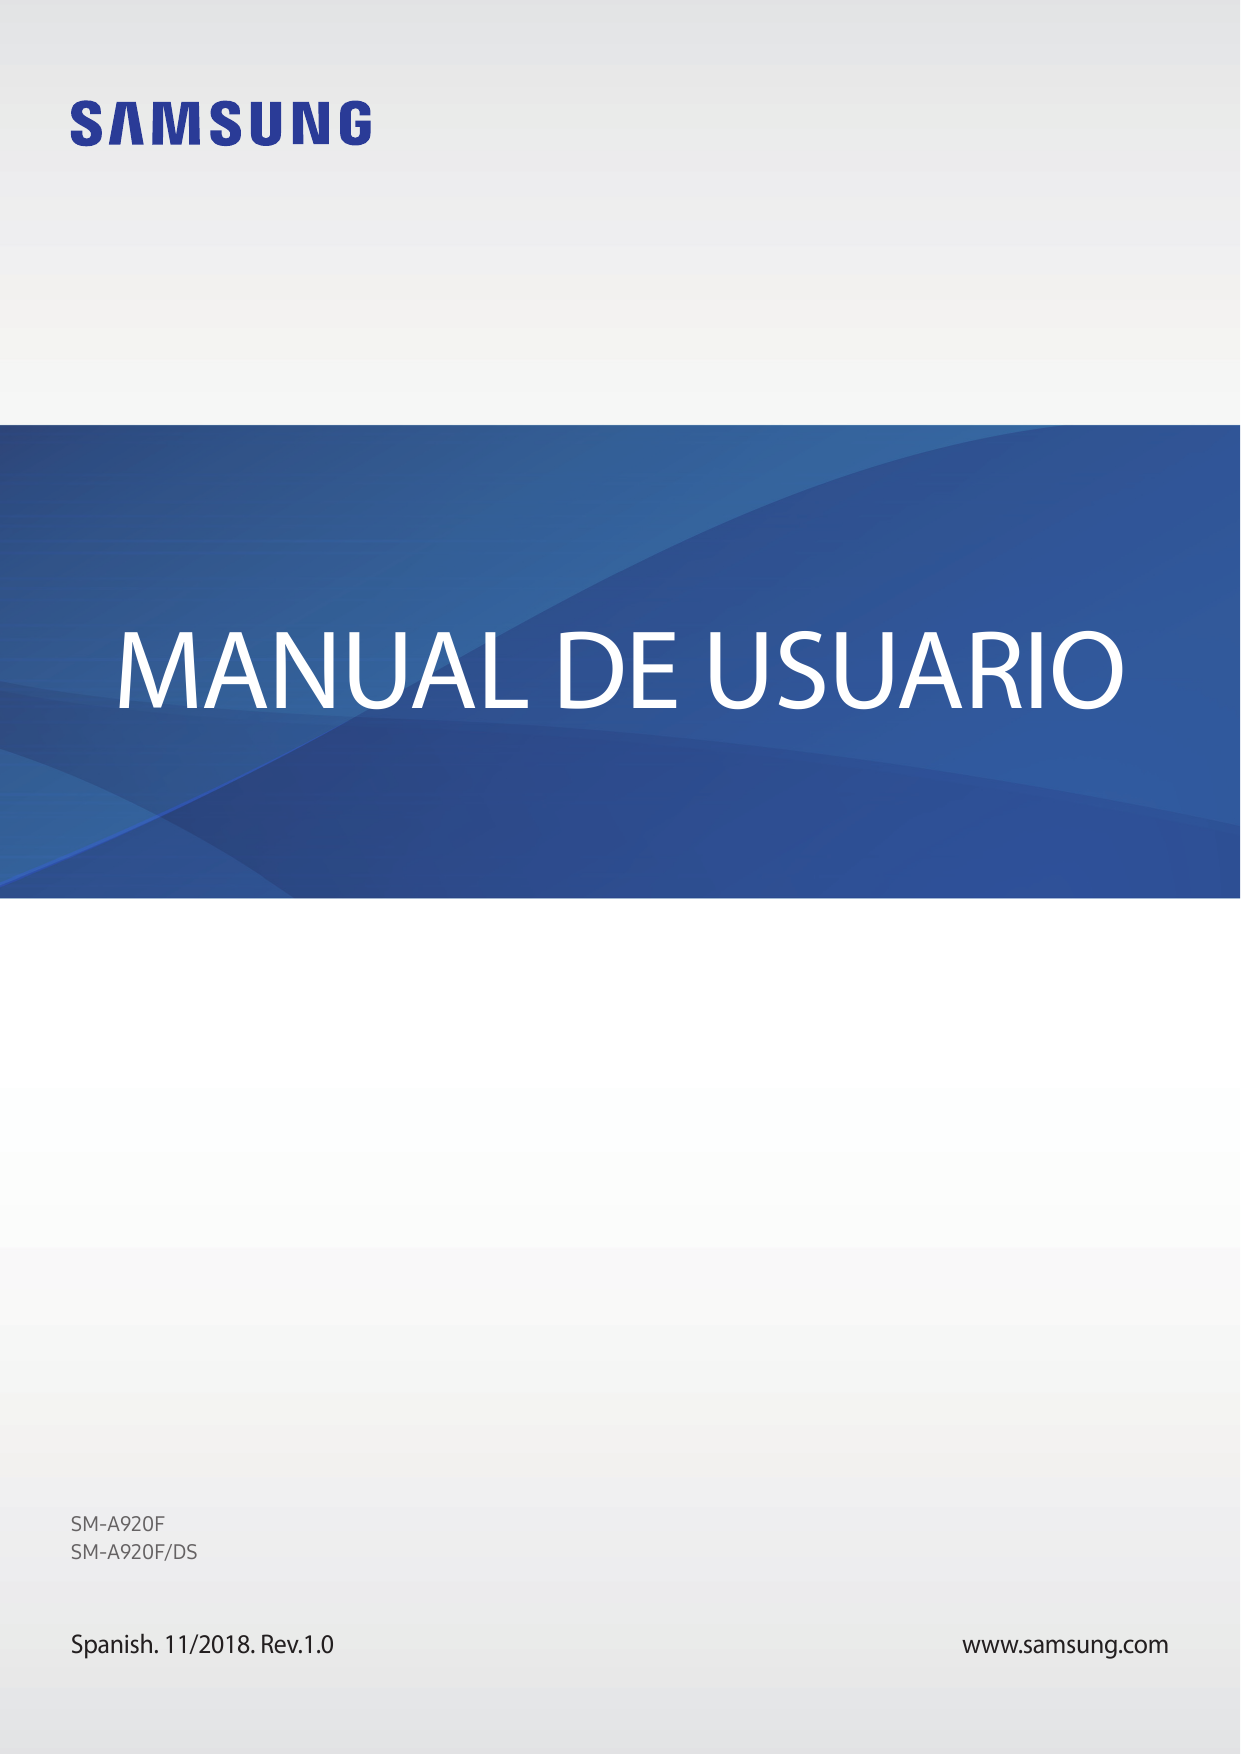 MANUAL DE USUARIOSM-A920FSM-A920F/DSSpanish. 11/2018. Rev.1.0www.samsung.com